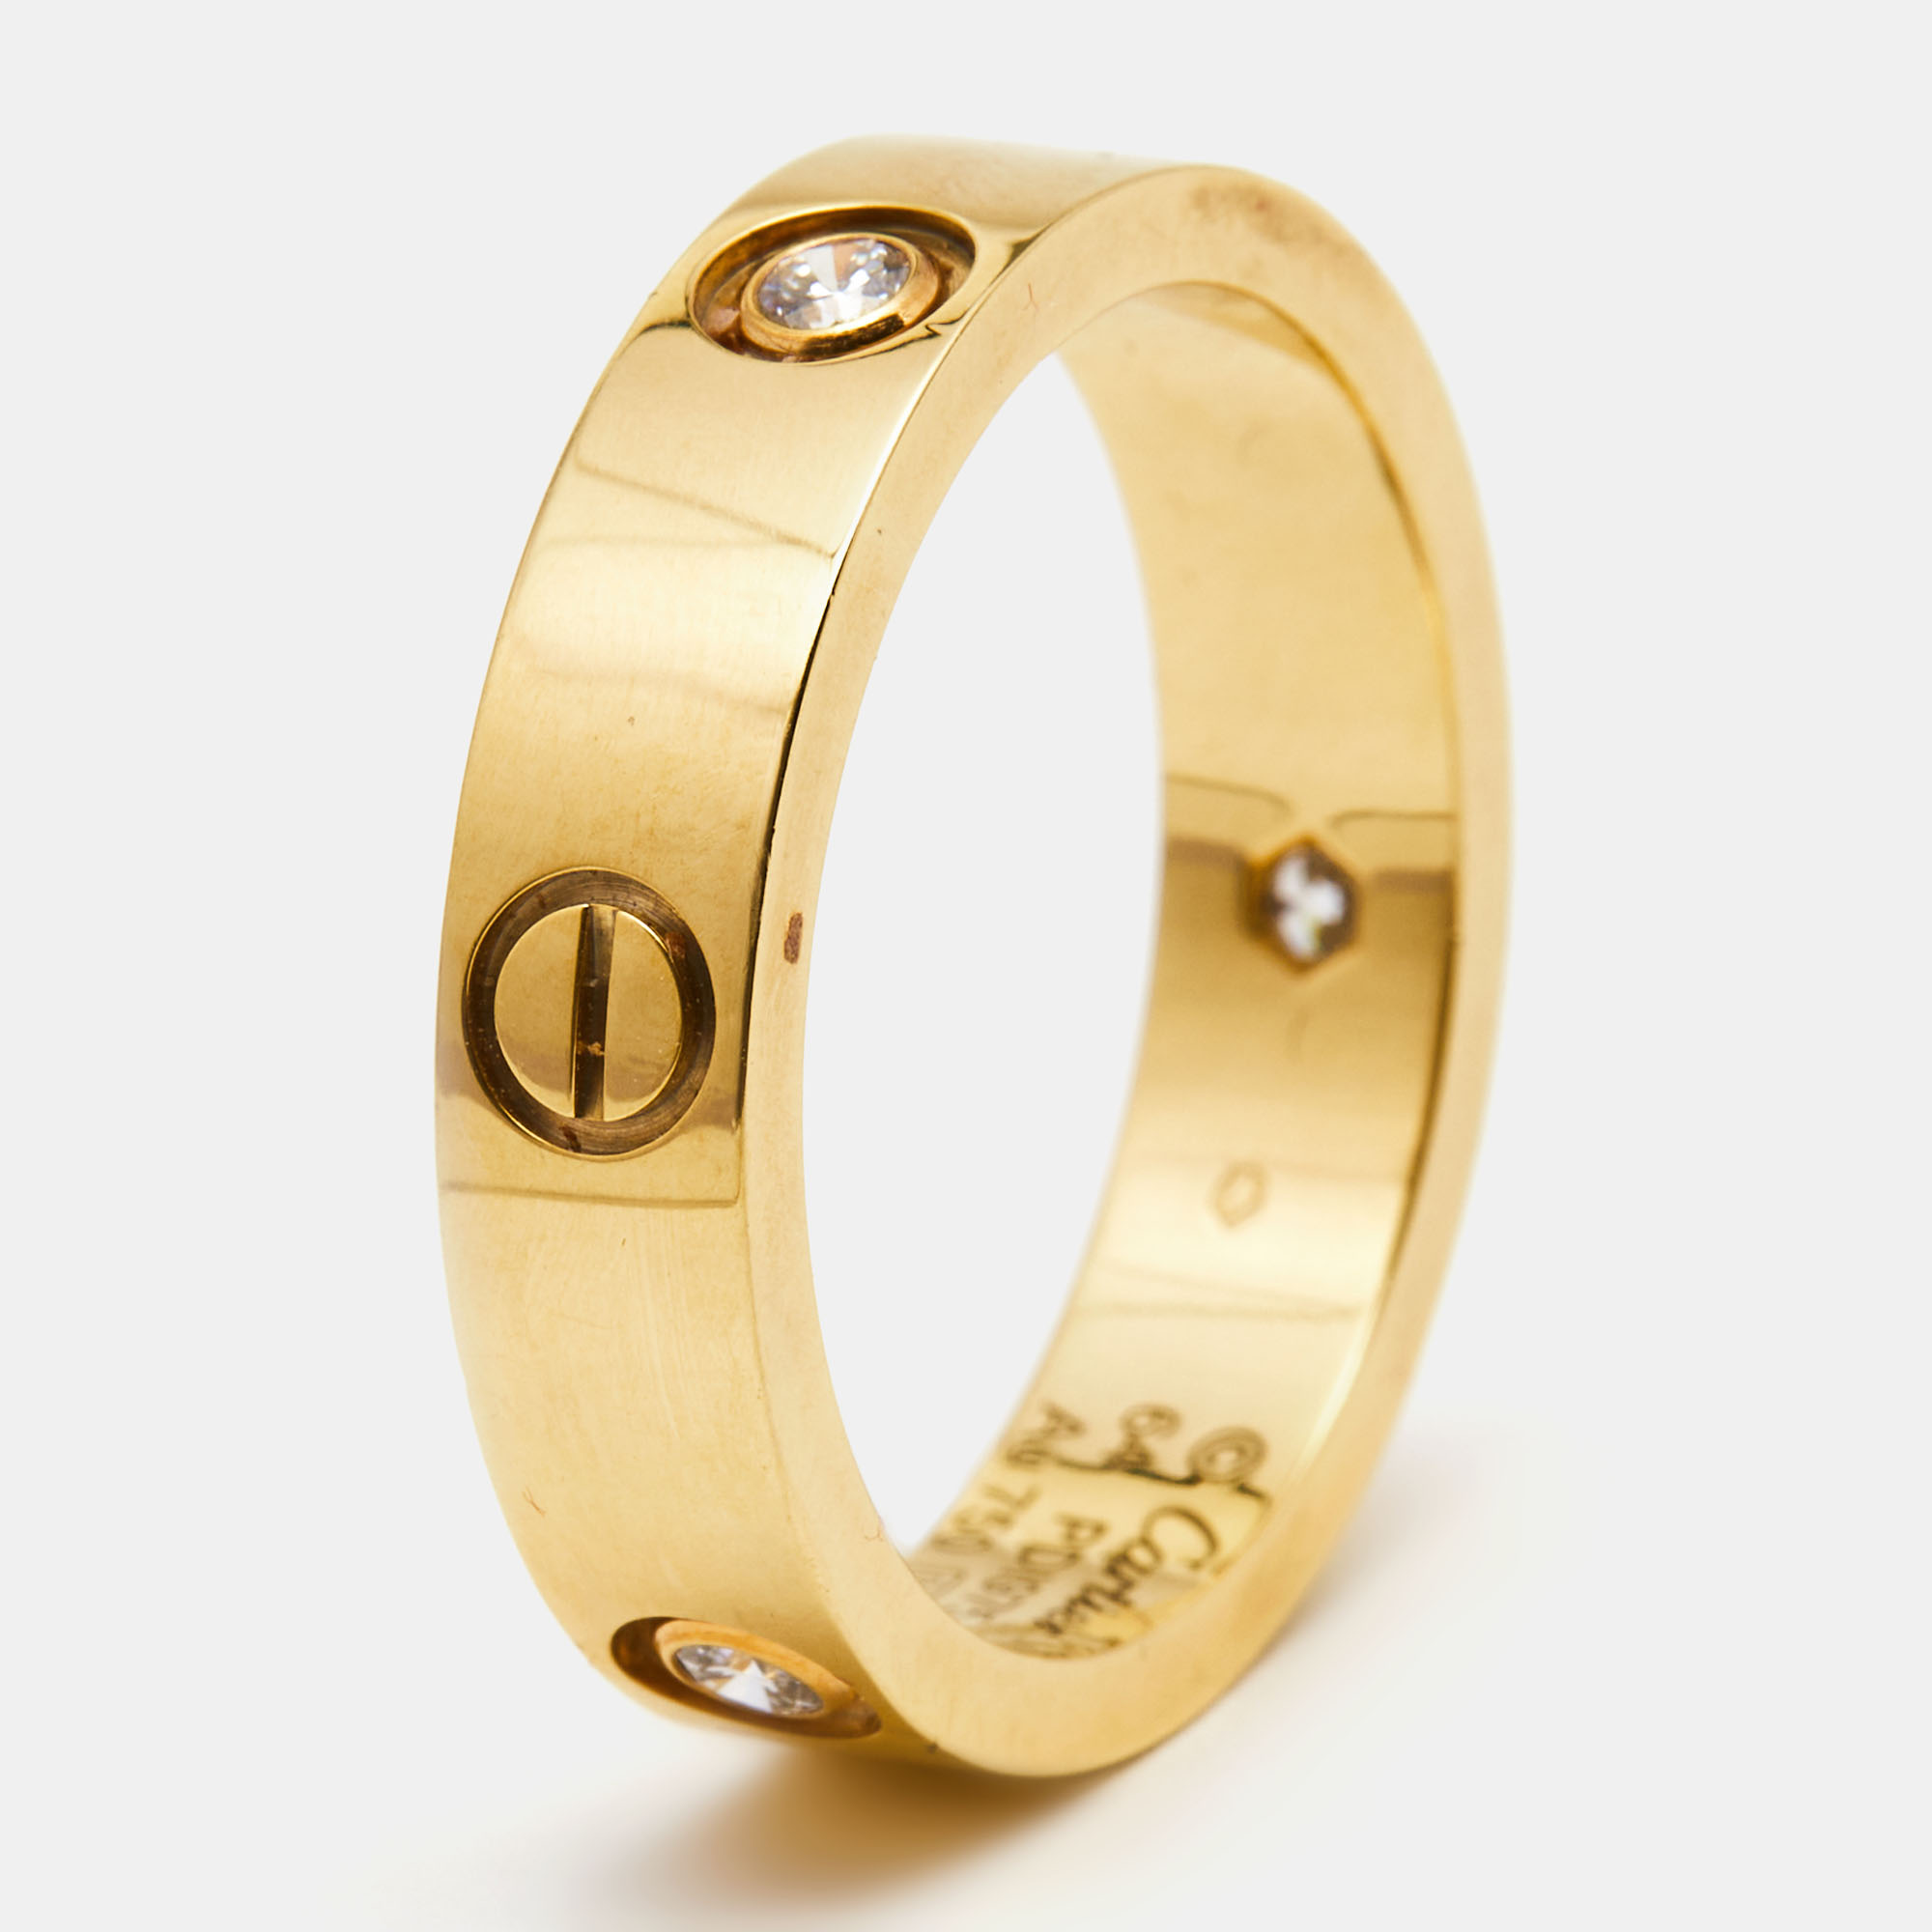 Cartier Love 3 Diamonds 18k Yellow Gold Ring Size 64